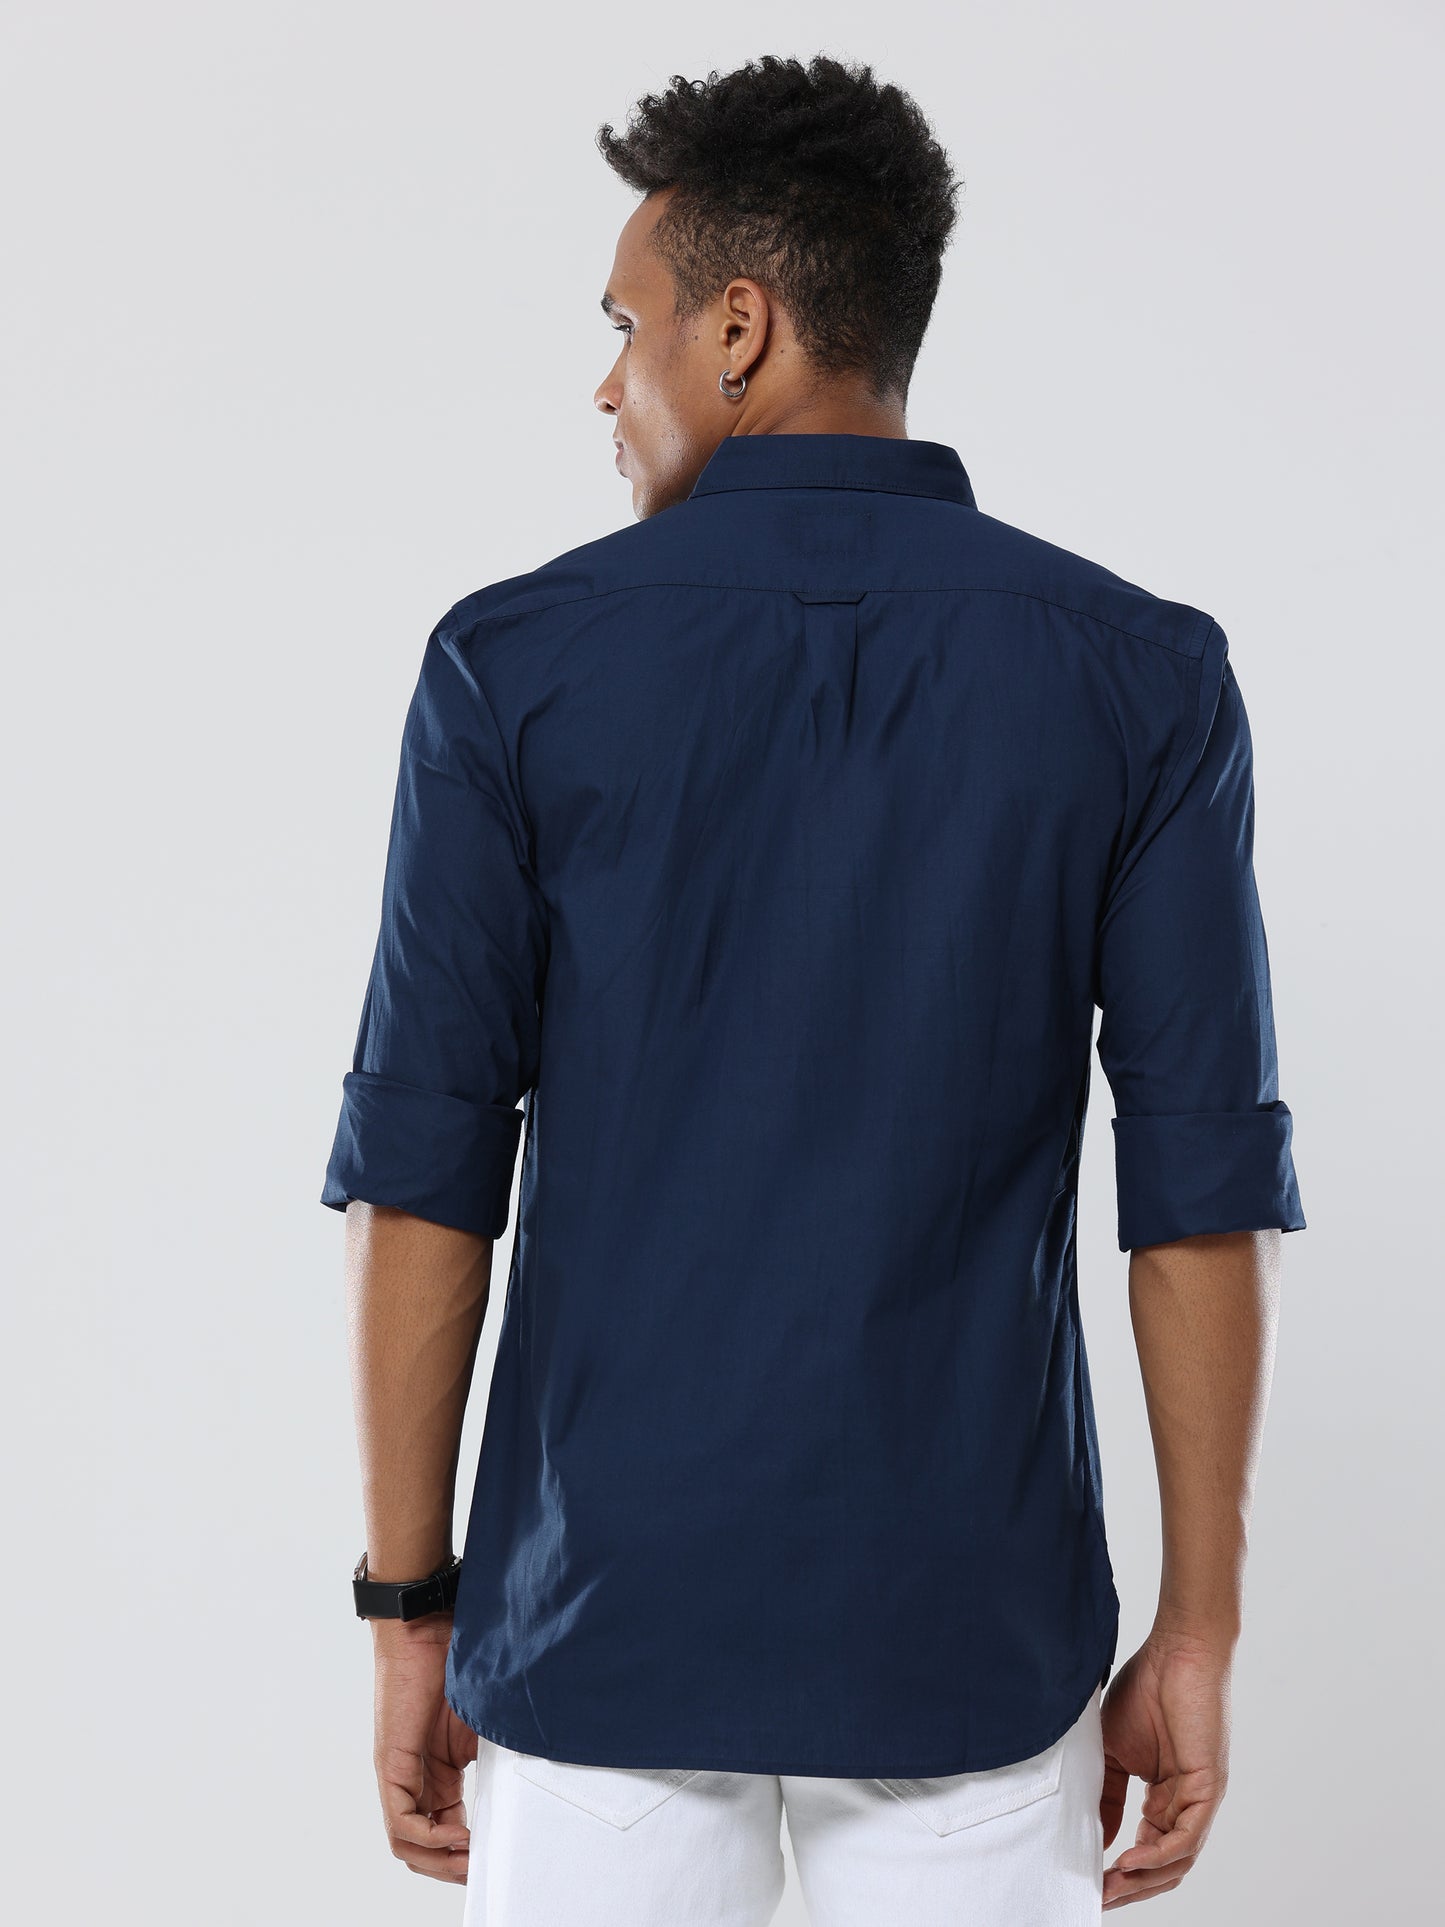 Plain Navy blue Premium cotton Formal Shirt for men